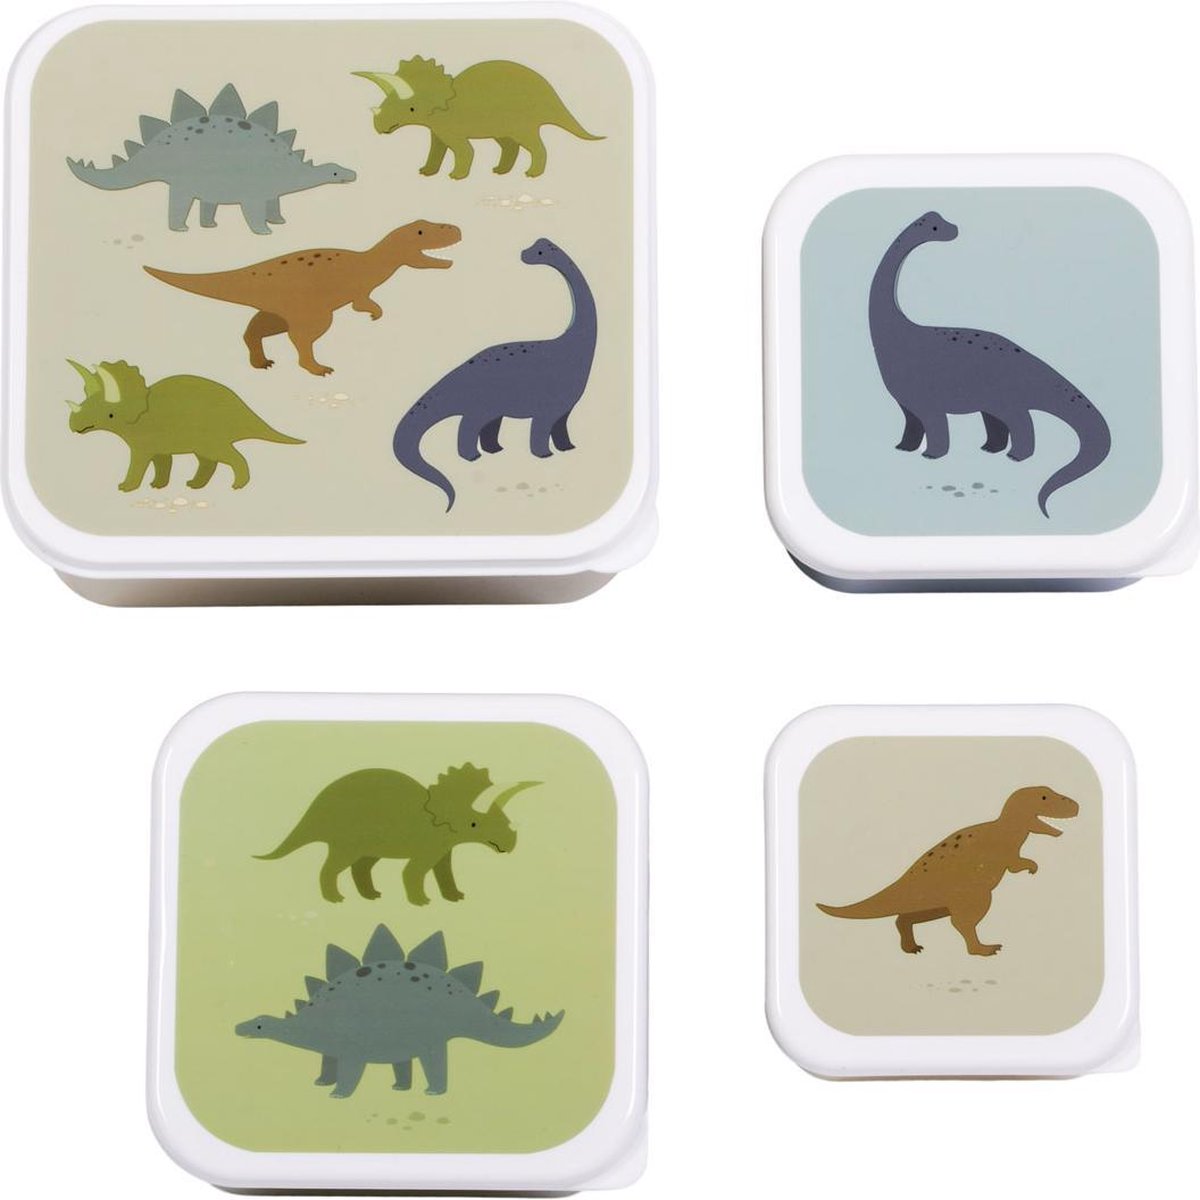 A Little Lovely Company - brooddoos - broodtrommel- Lunch & snack box set van 4 - Dinosaurussen